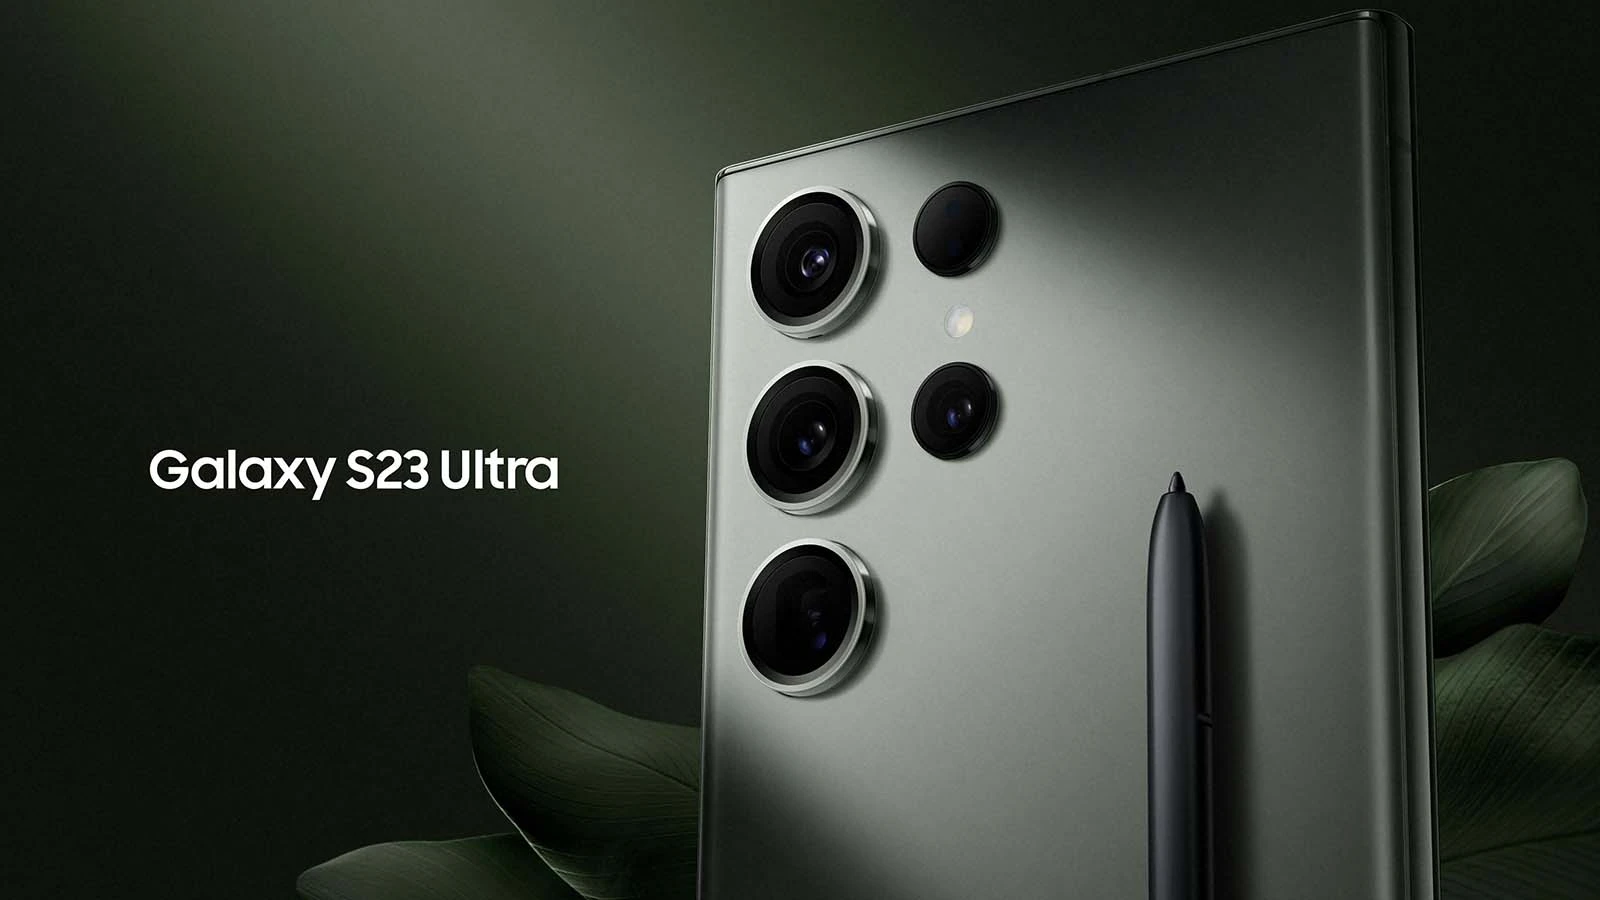 Samsung Galaxy S23 Ultra was introduced